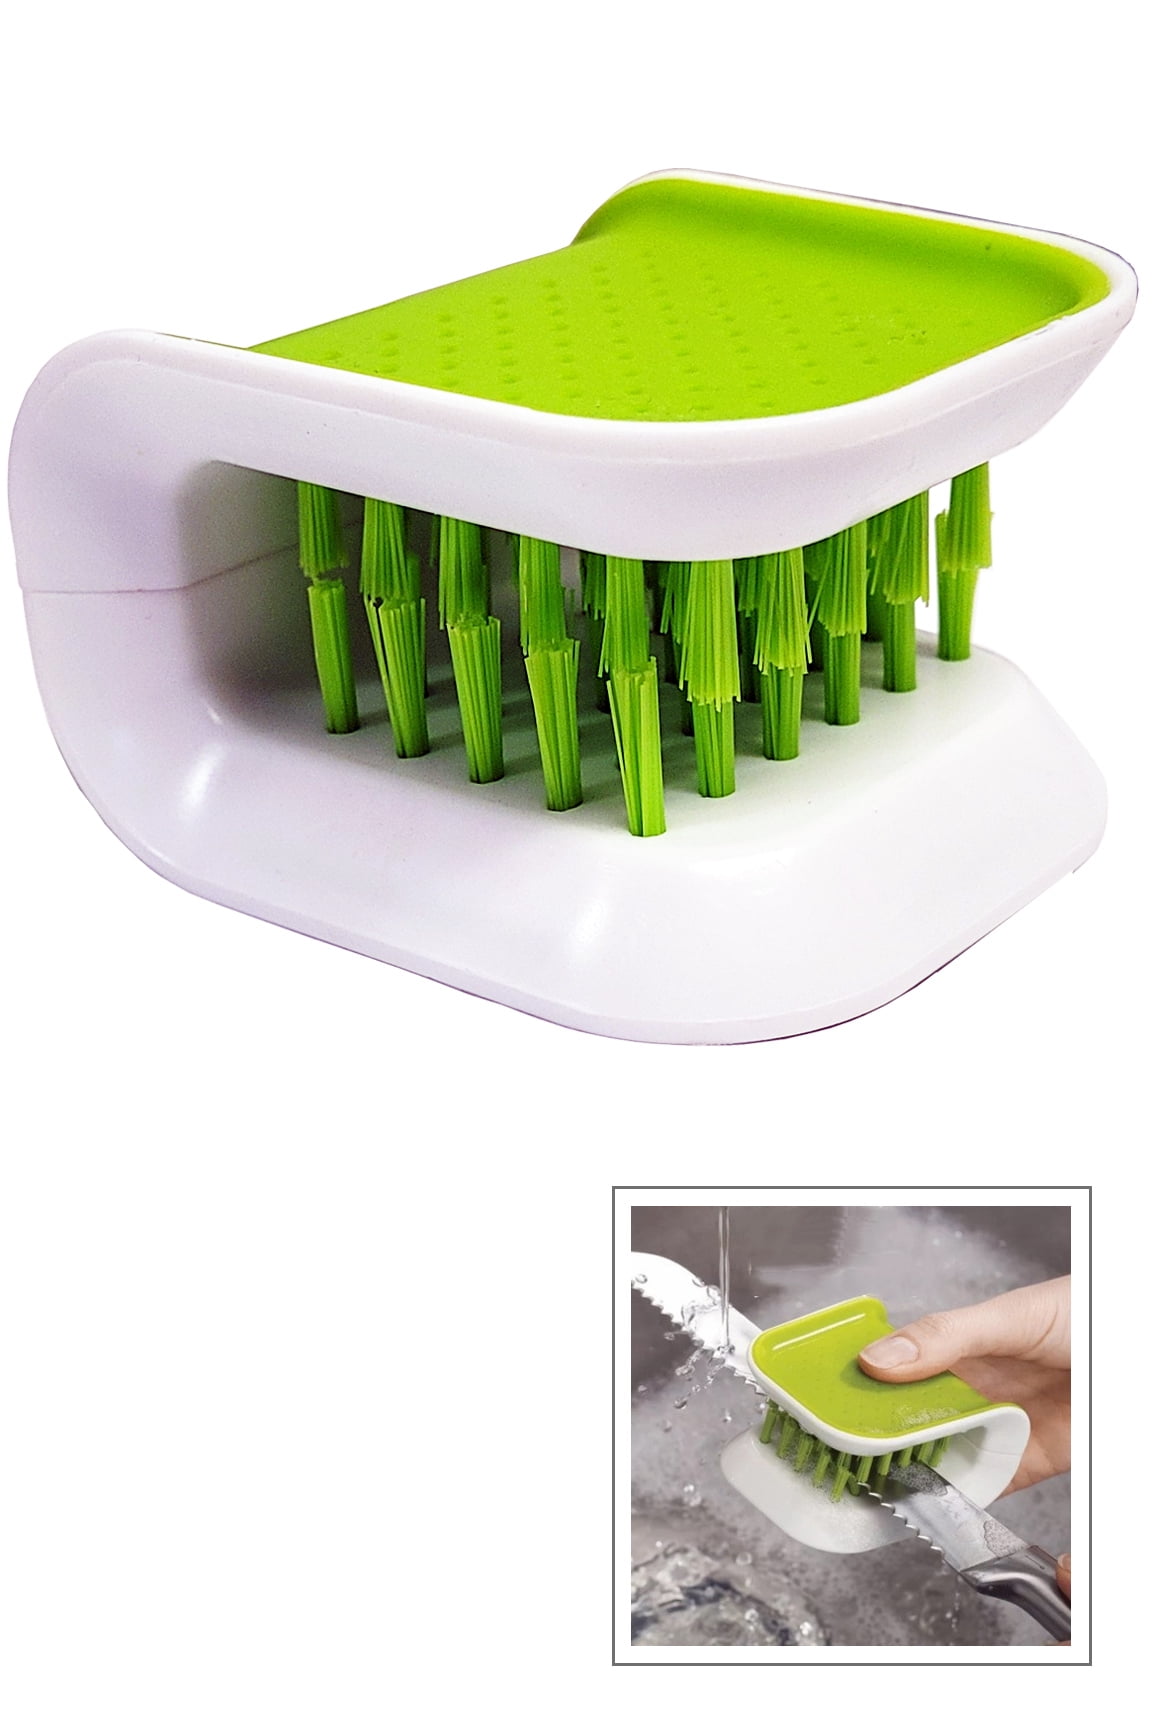 Dish brush with dish soap dispenser PALM SCRUB, green, Joseph